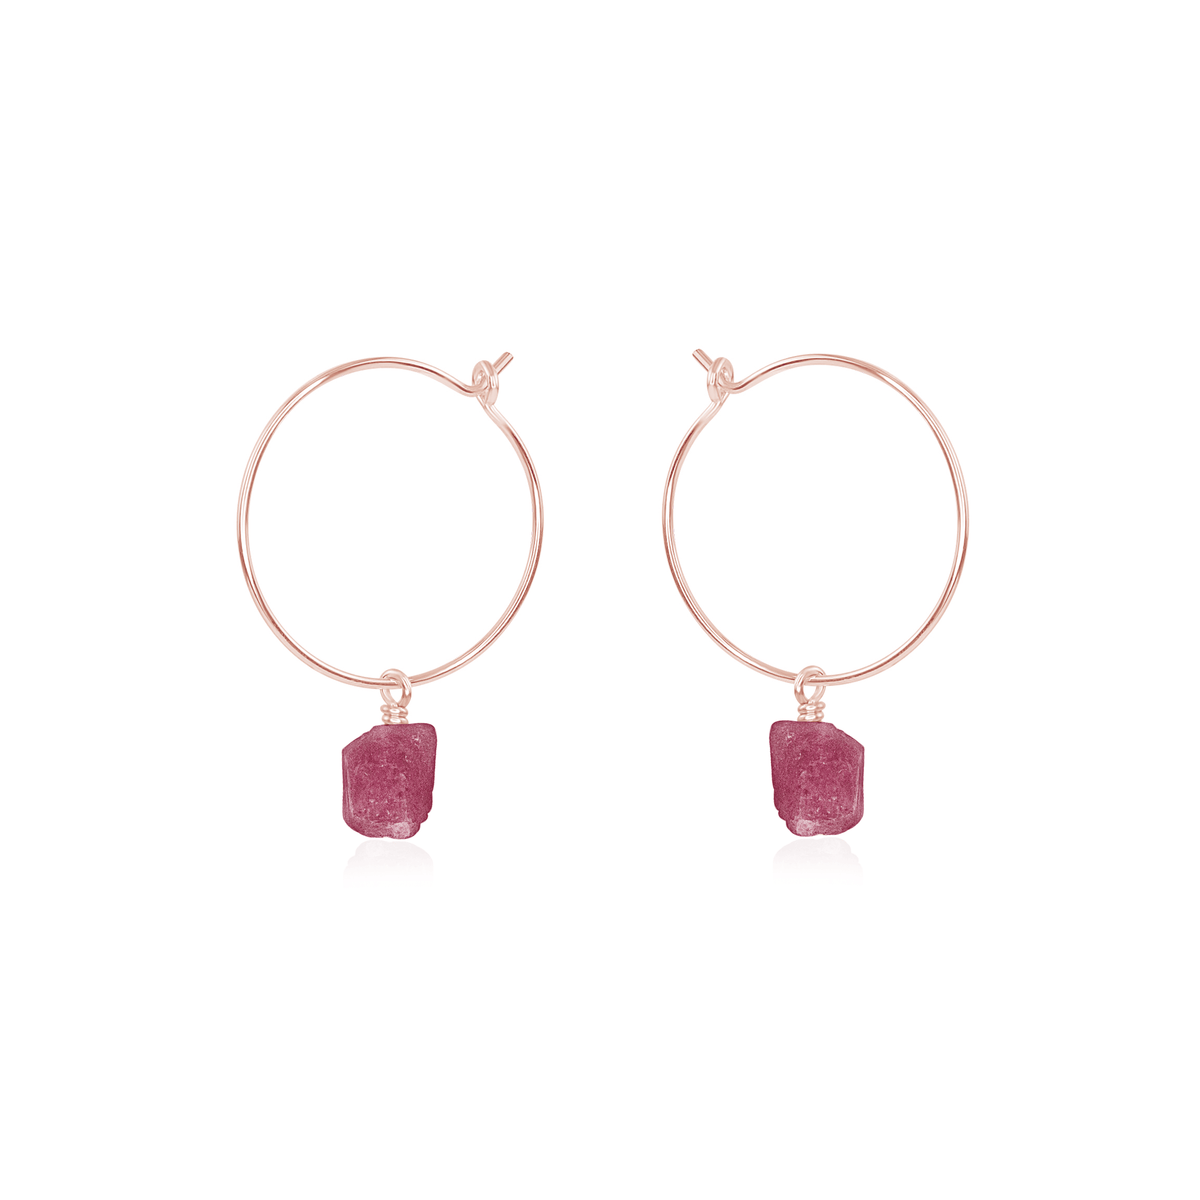 Raw Pink Tourmaline Gemstone Dangle Hoop Earrings - Raw Pink Tourmaline Gemstone Dangle Hoop Earrings - 14k Rose Gold Fill - Luna Tide Handmade Crystal Jewellery